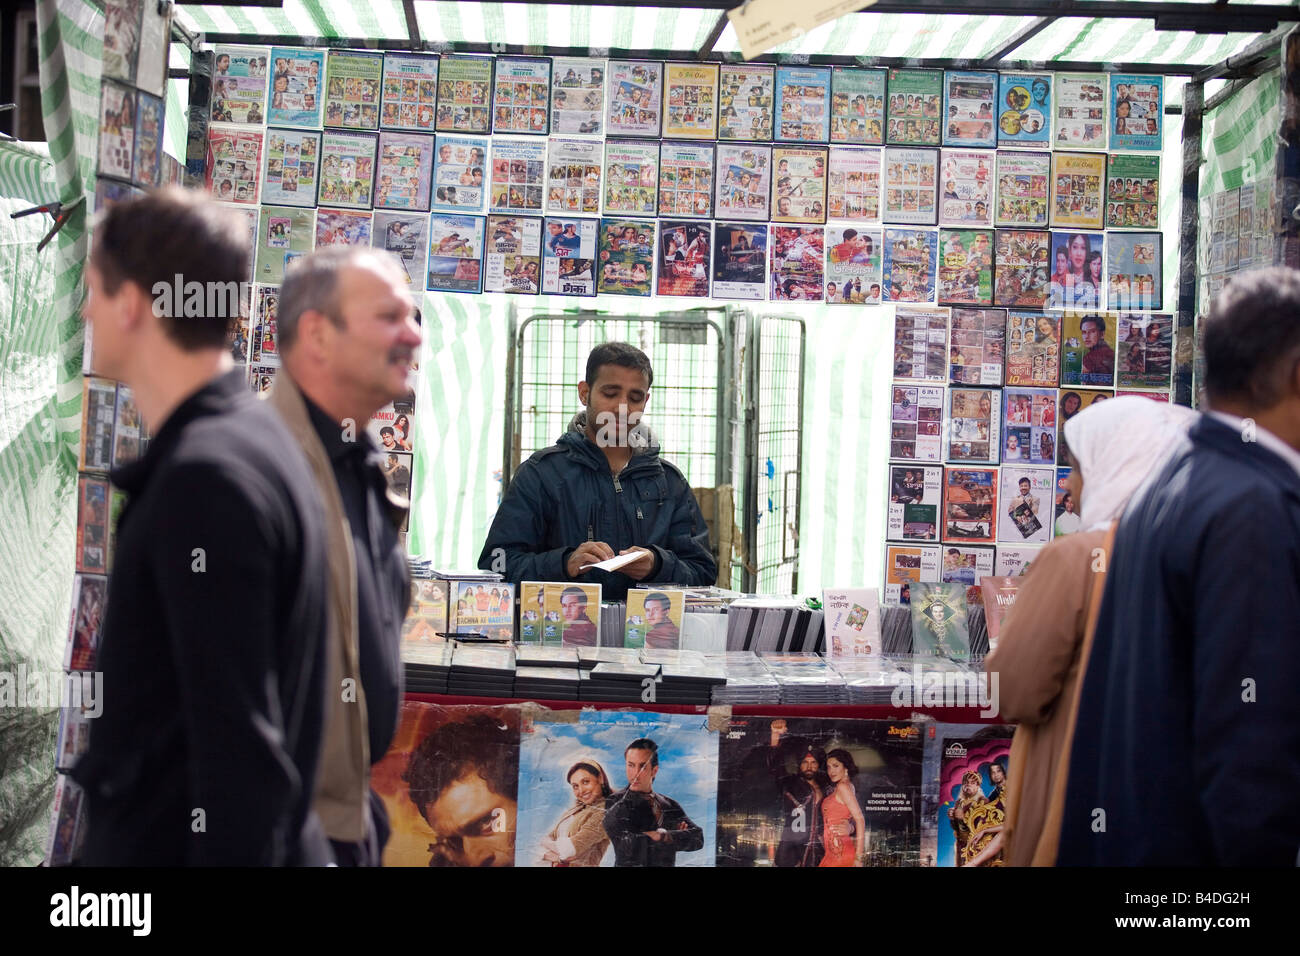 Street scene, Whitechapel market, East End, London Stock Photo